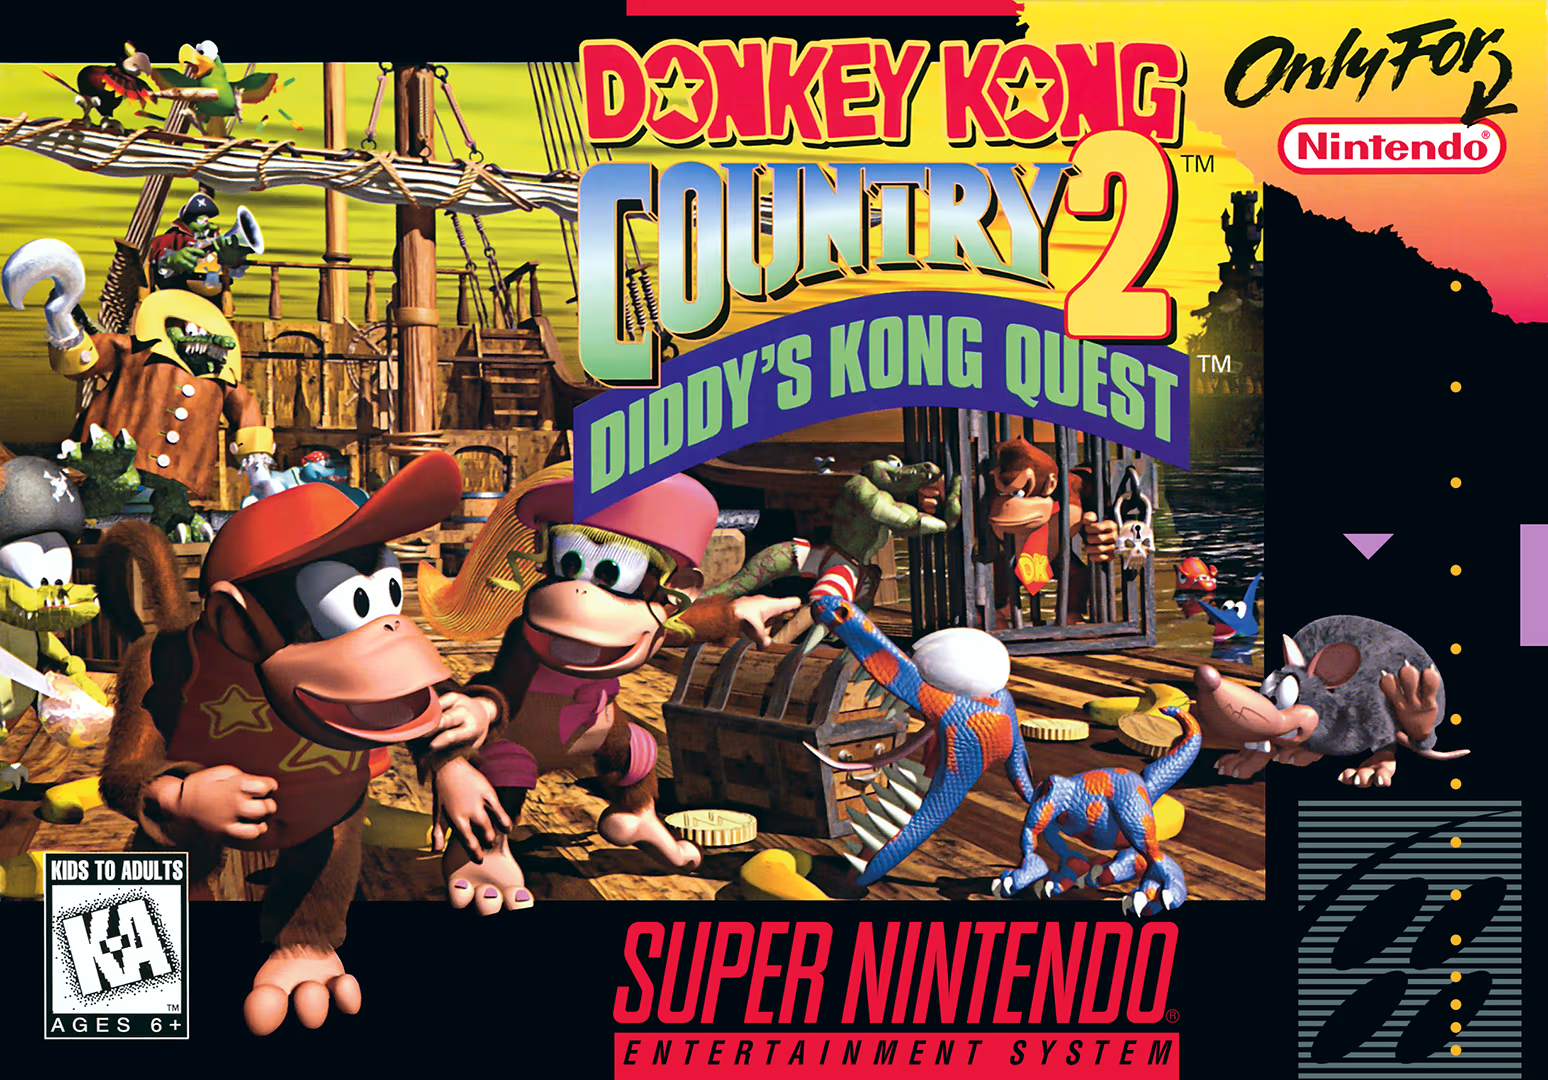 Mario VS Donkey Kong GBA Remake Revealed During Nintendo Direct